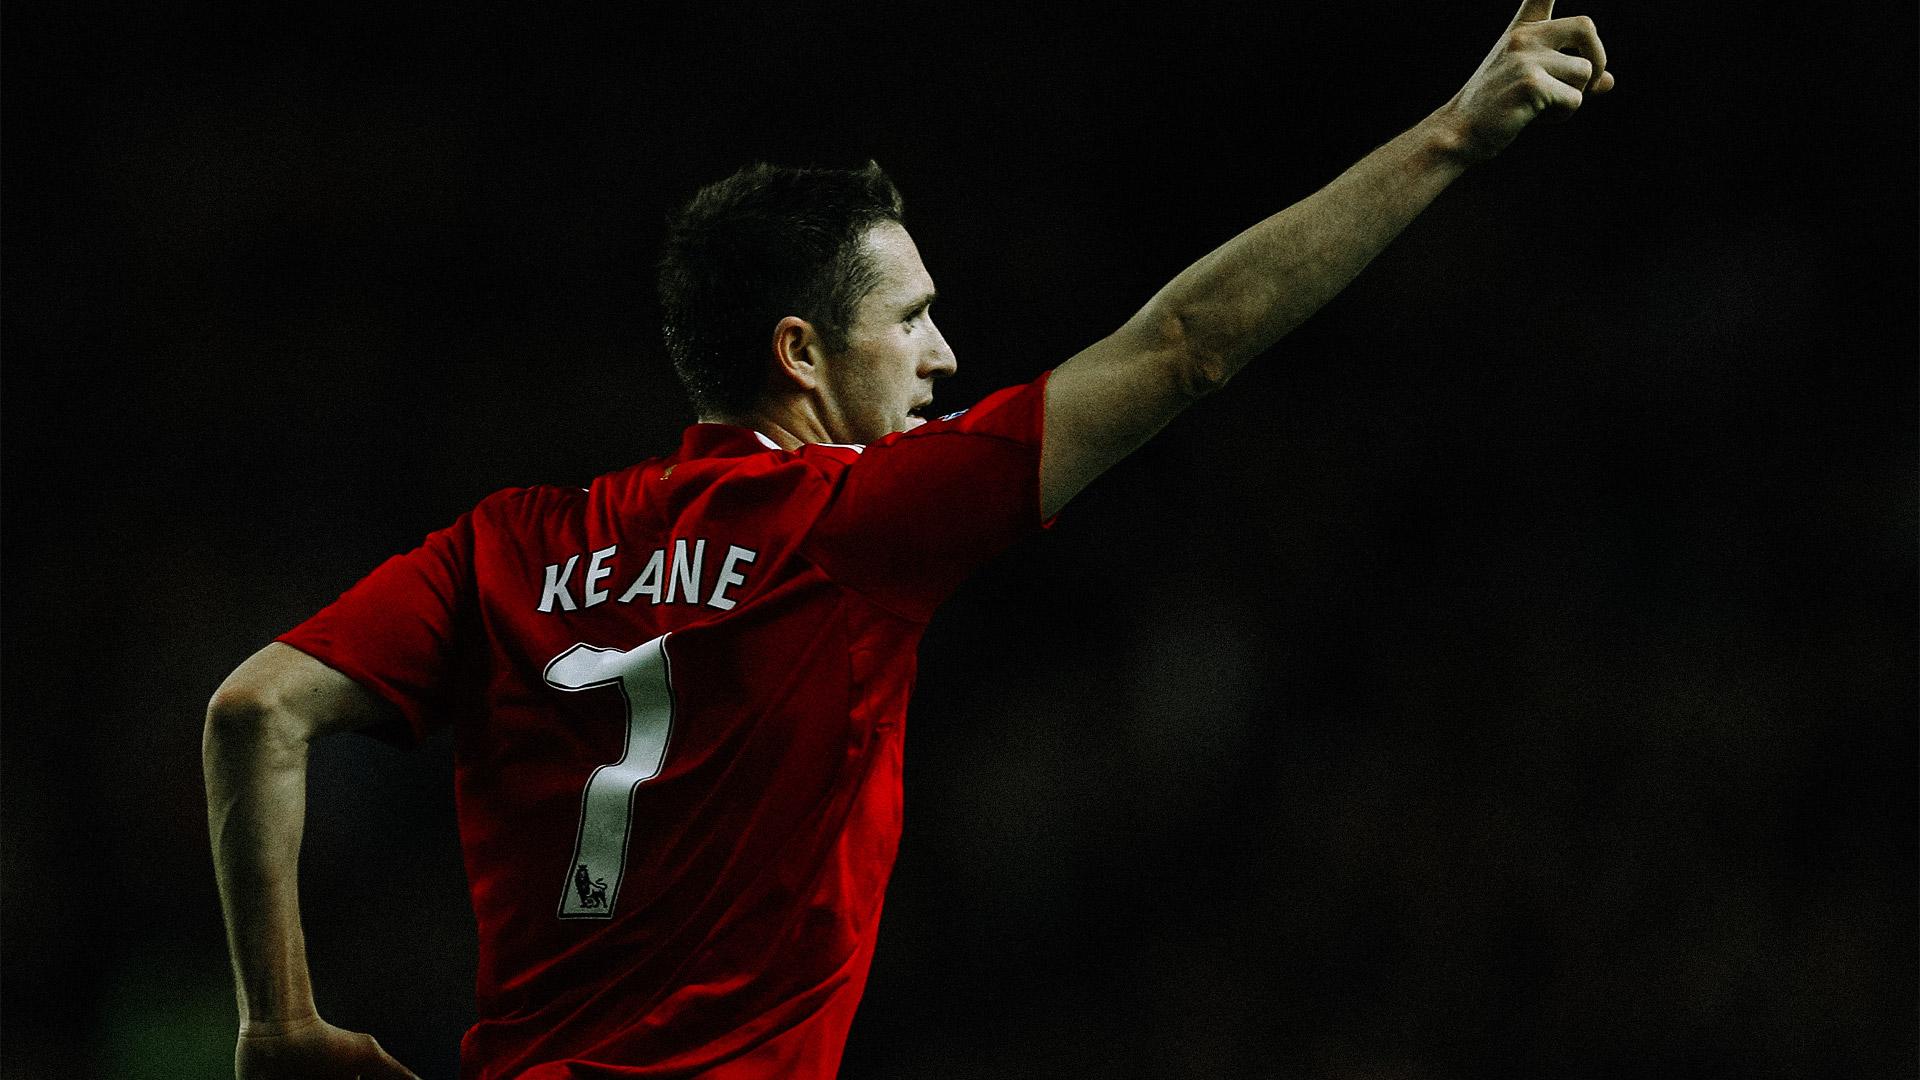 Robbie Keane Liverpool jersey